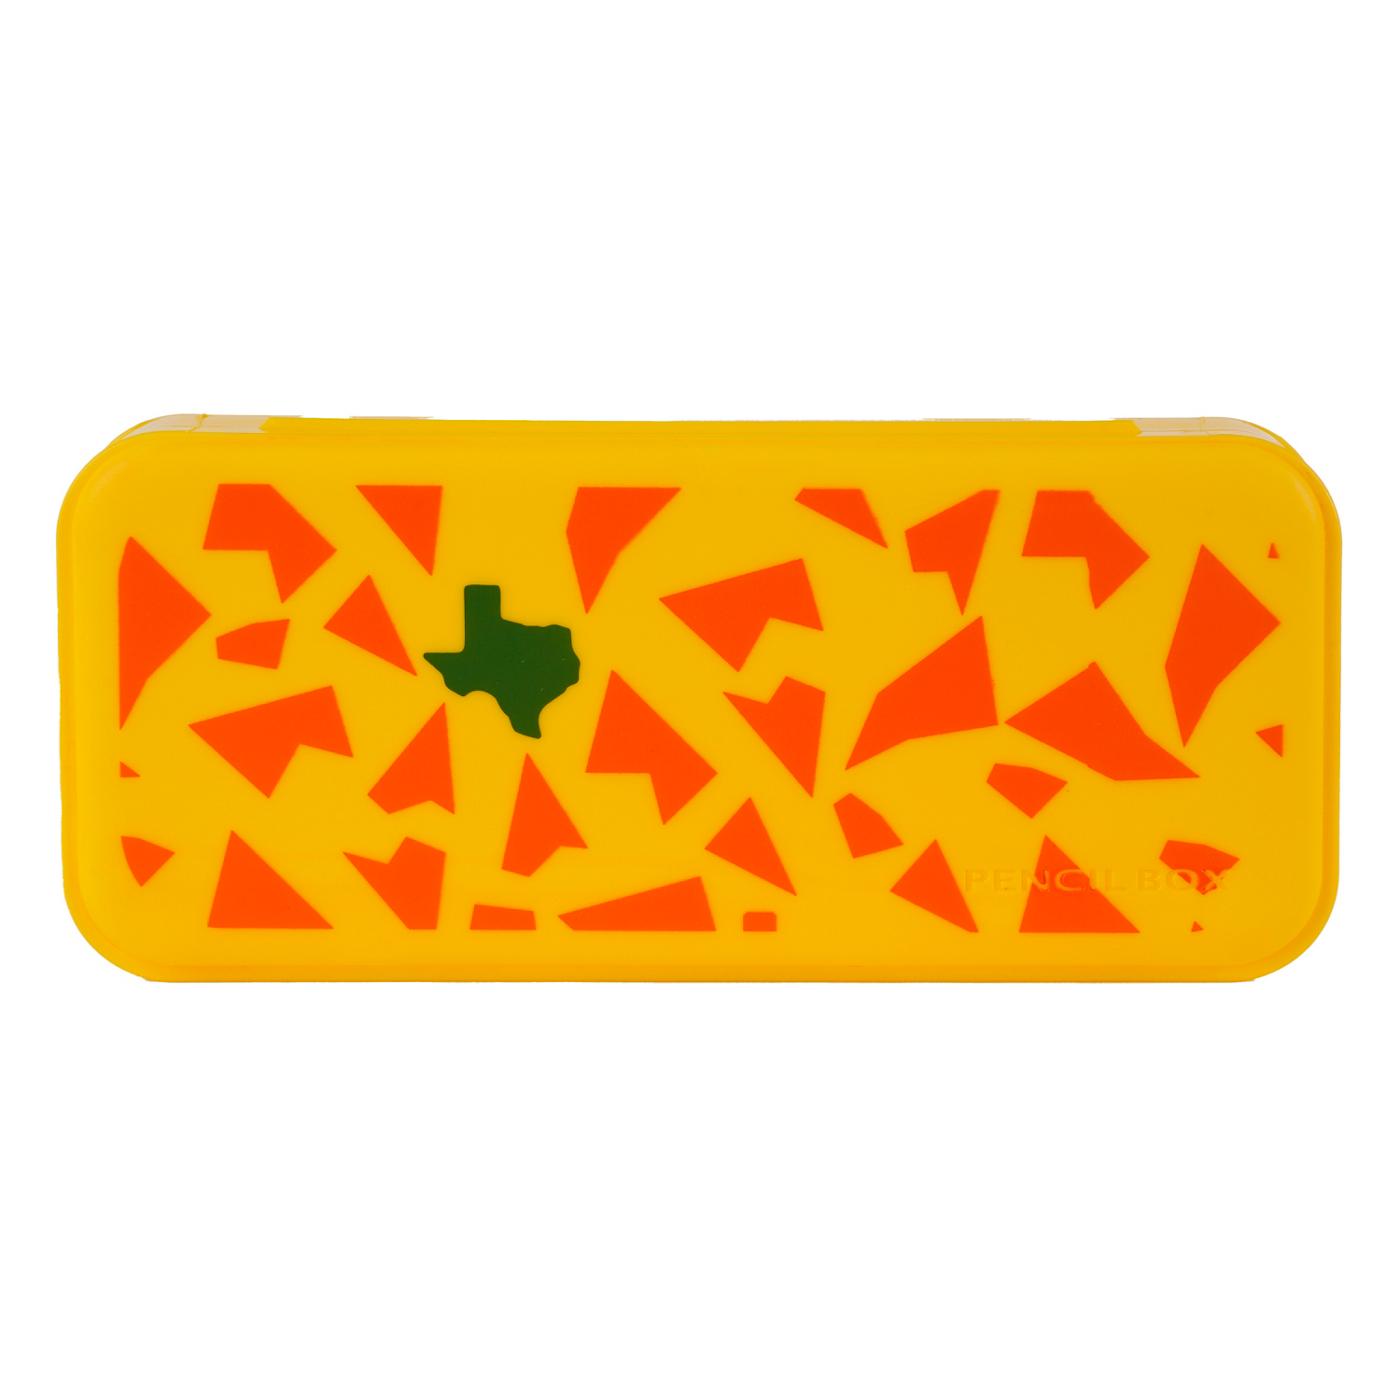 Destination Holiday Texas Pencil Box - Yellow; image 1 of 3